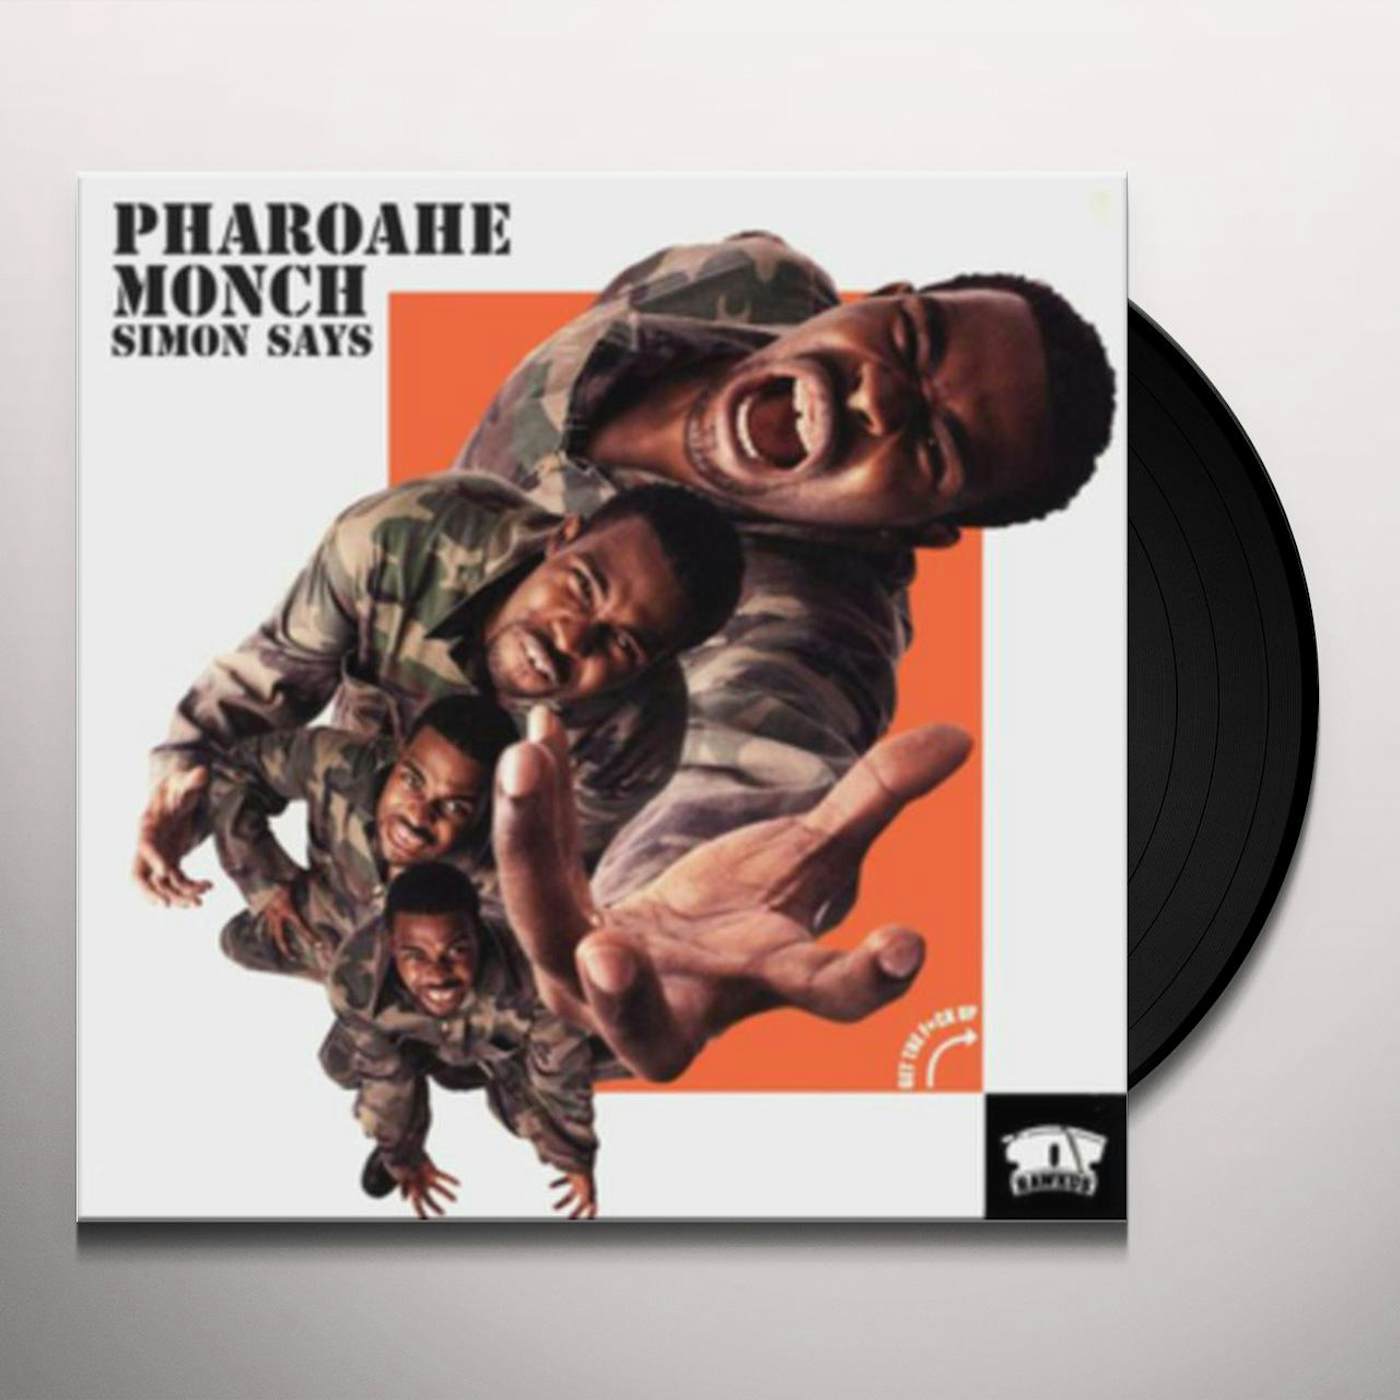 war ( we are renegades ) cd - Pharoahe Monch